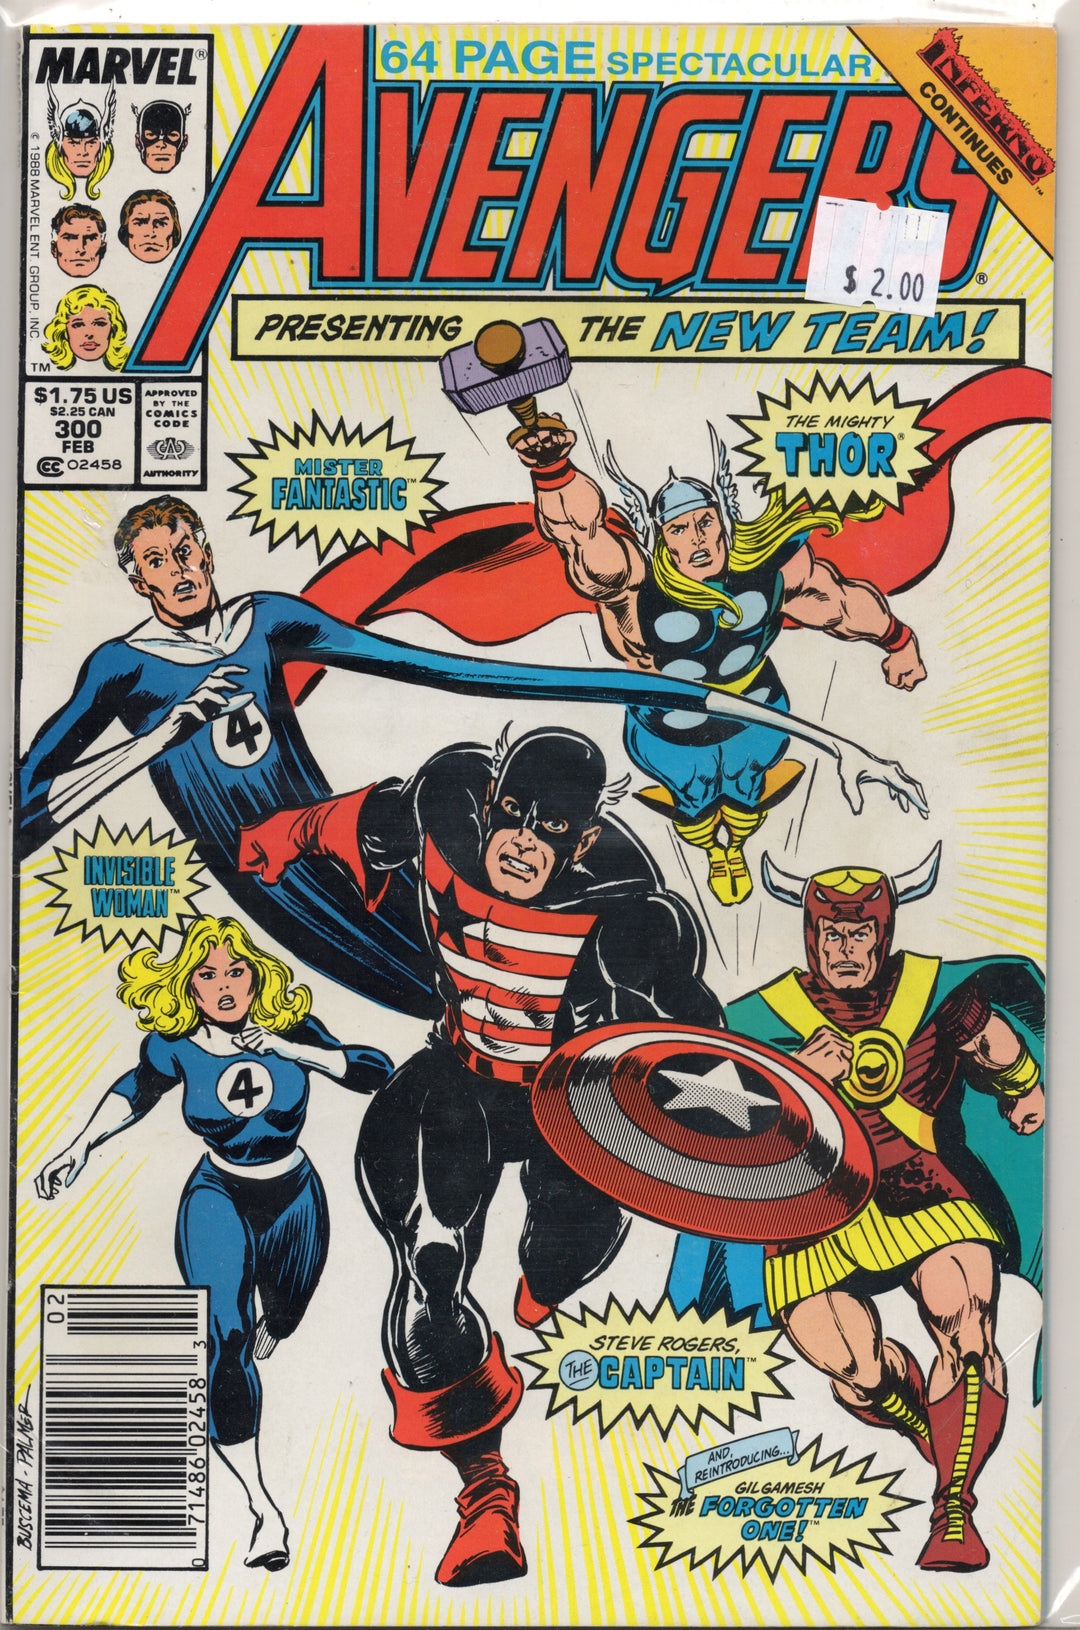 The Avengers #300